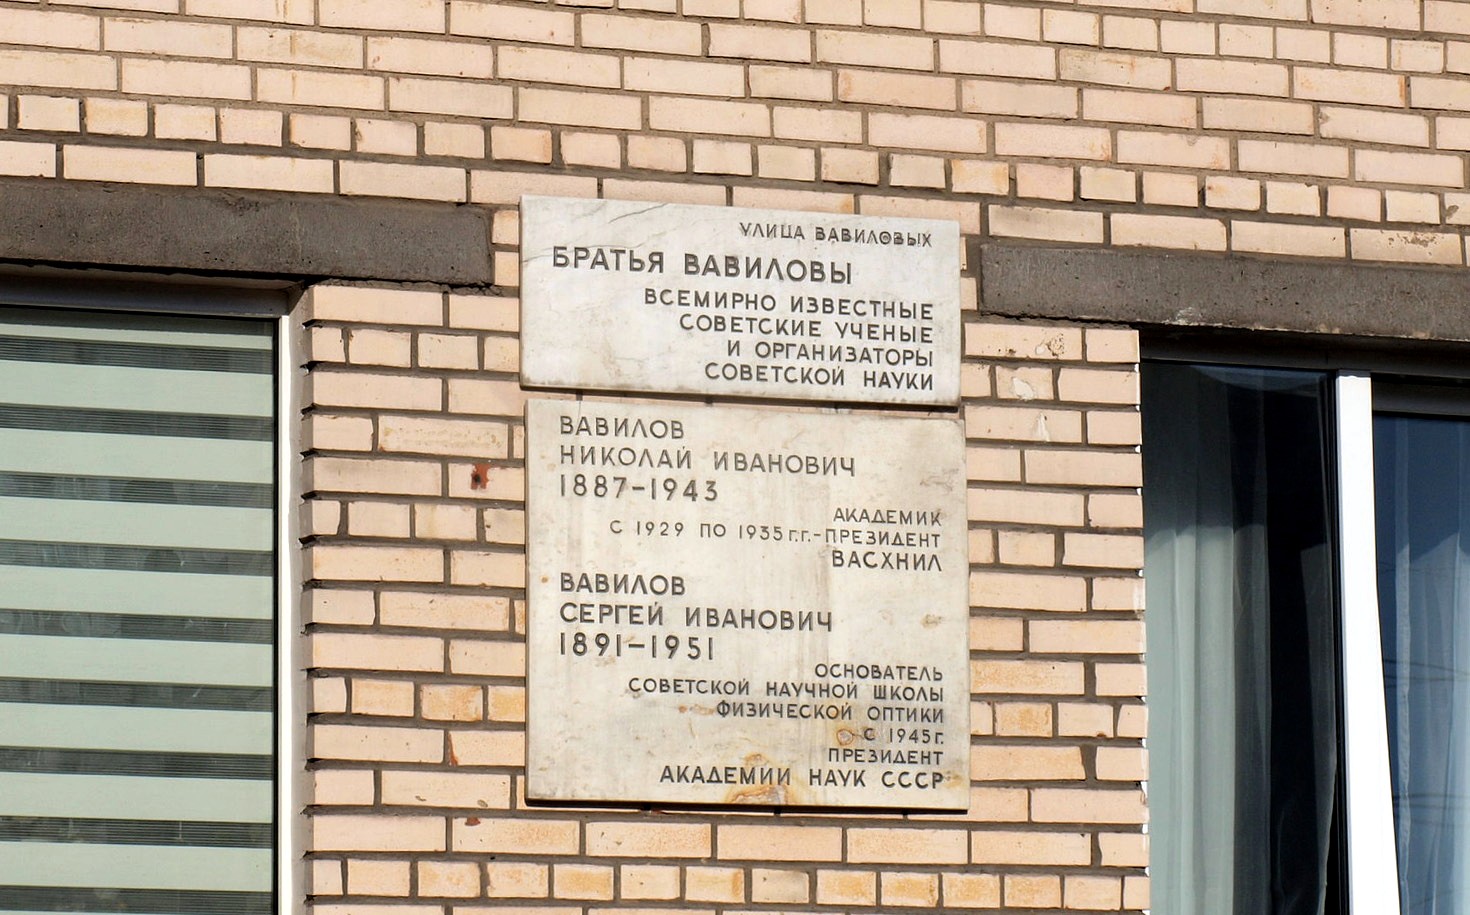 Saint Petersburg, Улица Вавиловых, 4 корп. 1 (подъезд 5). Saint Petersburg — Memorial plaques